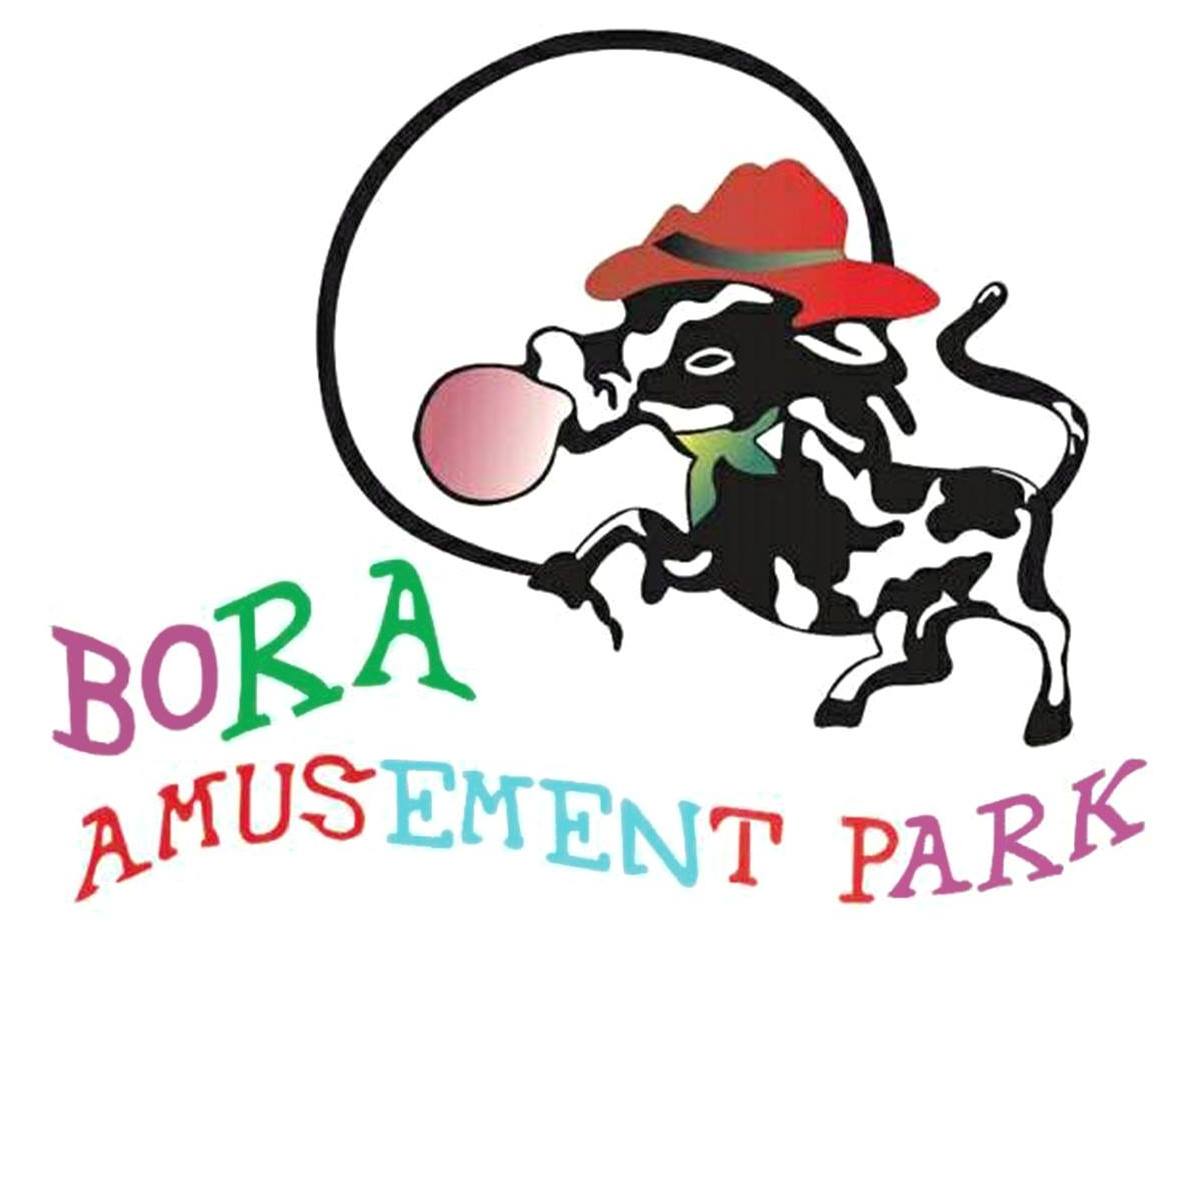 Bora Amusment Park